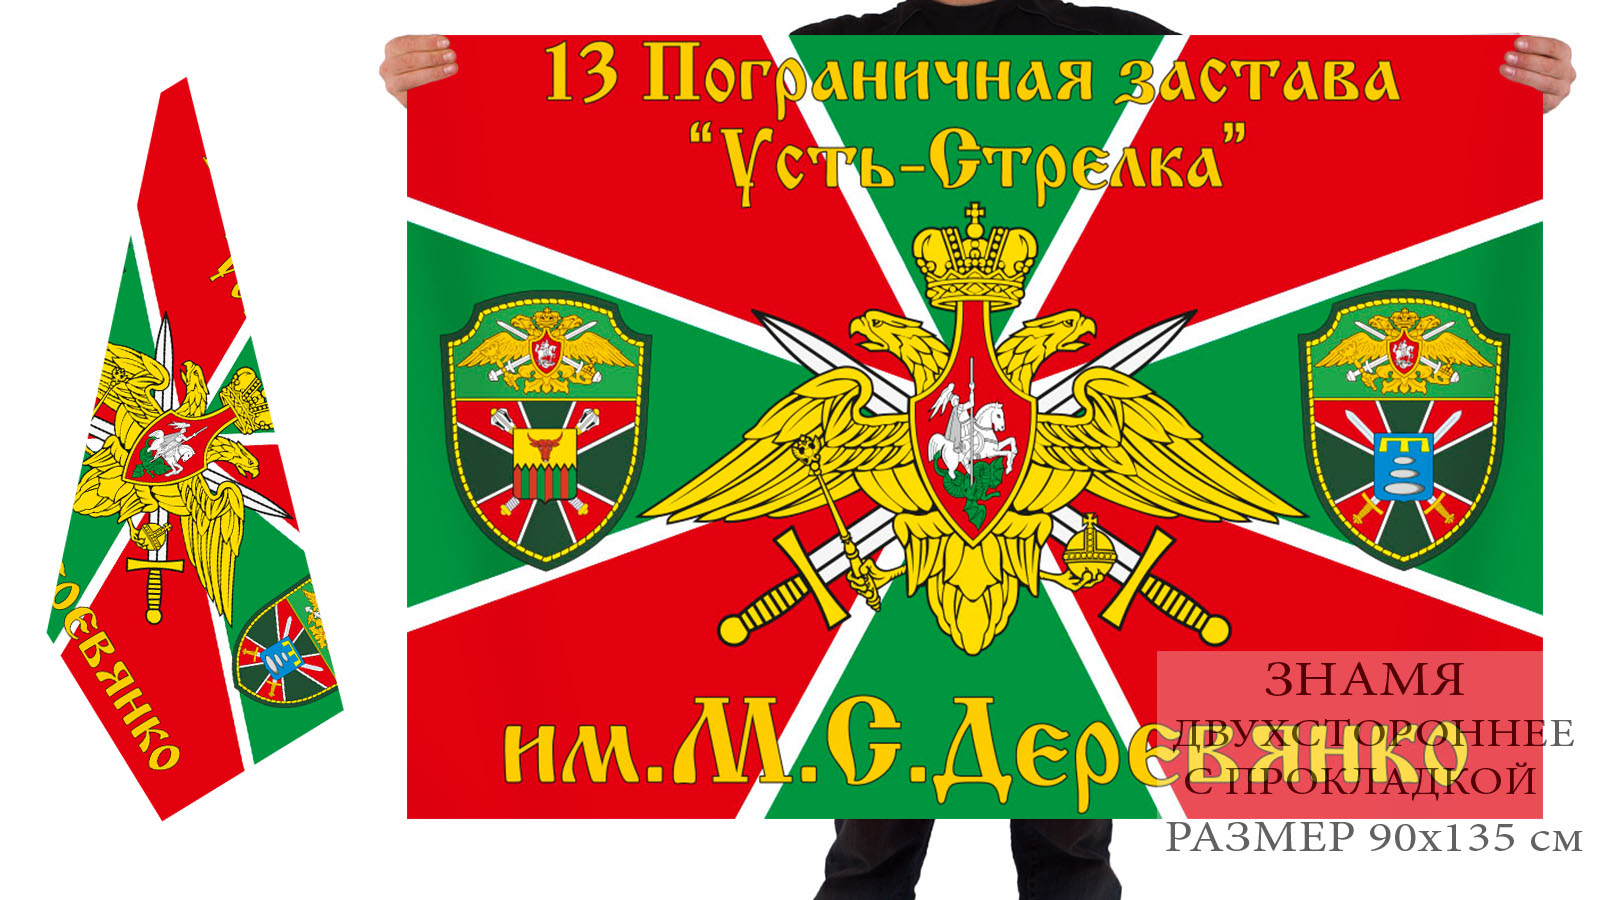 Двусторонний флаг 13 Погранзаставы "Усть-Стрелка" им. М.С. Деревянко